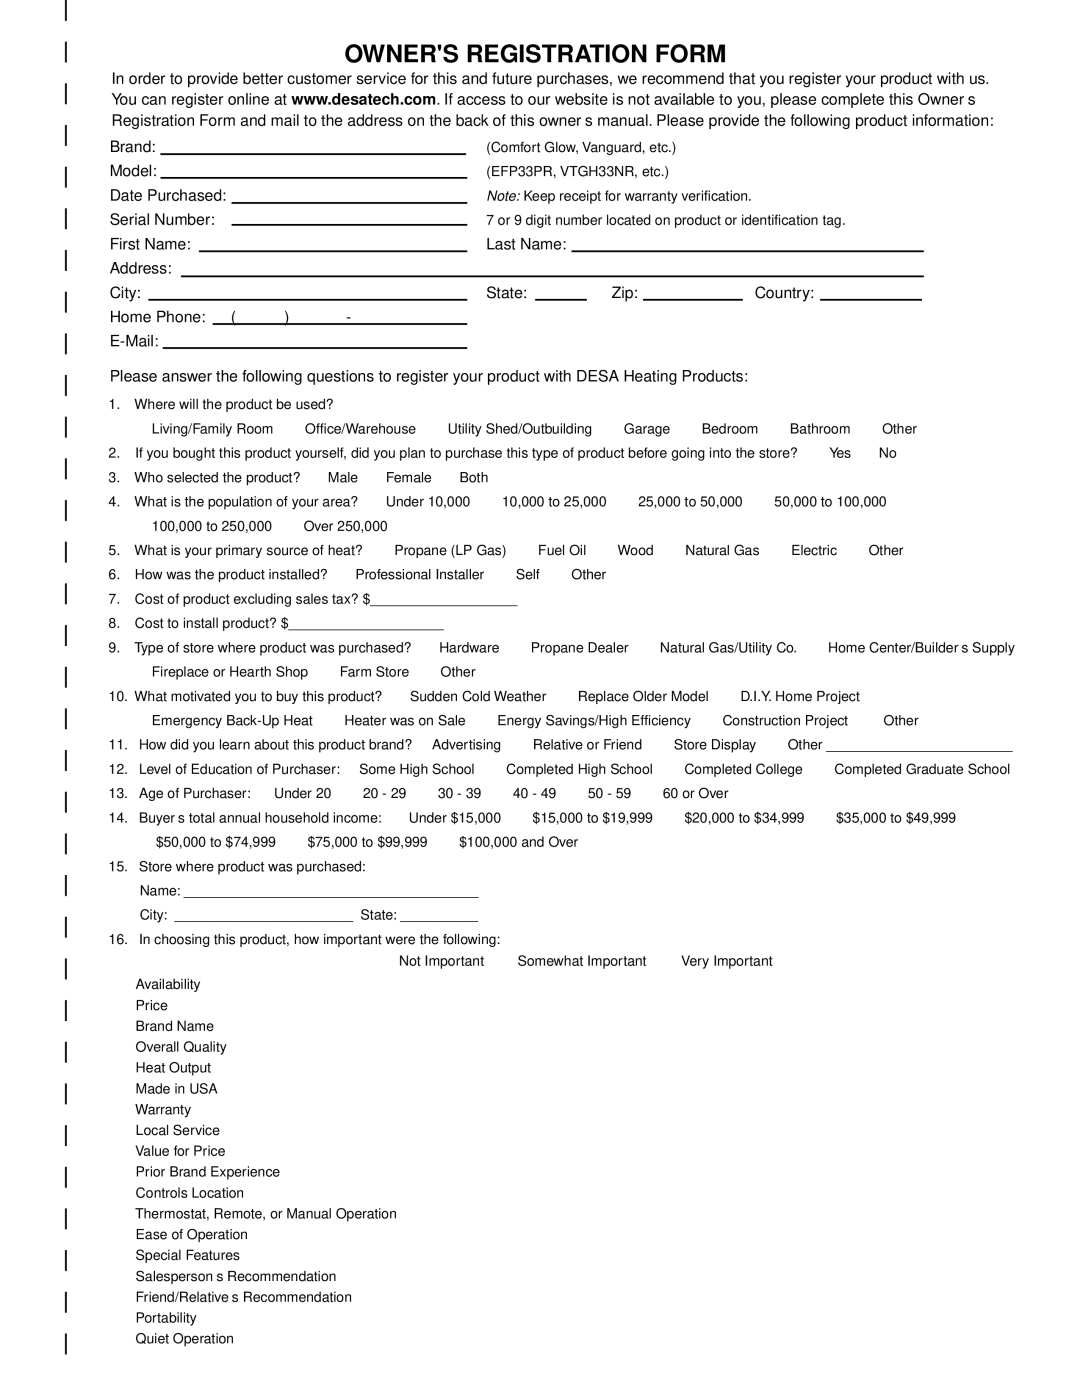 Desa VML27PR installation manual Owners Registration Form 